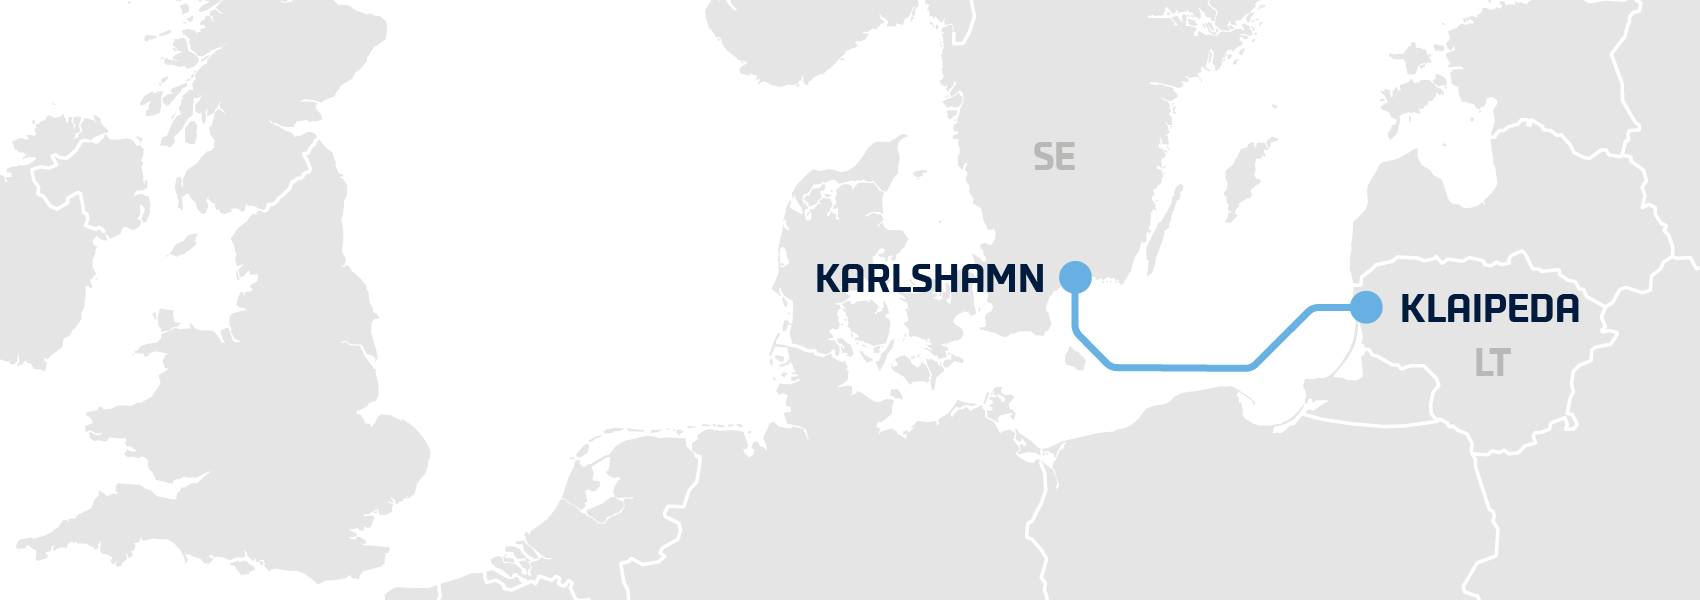 Karlshamn-Klaipeda hero